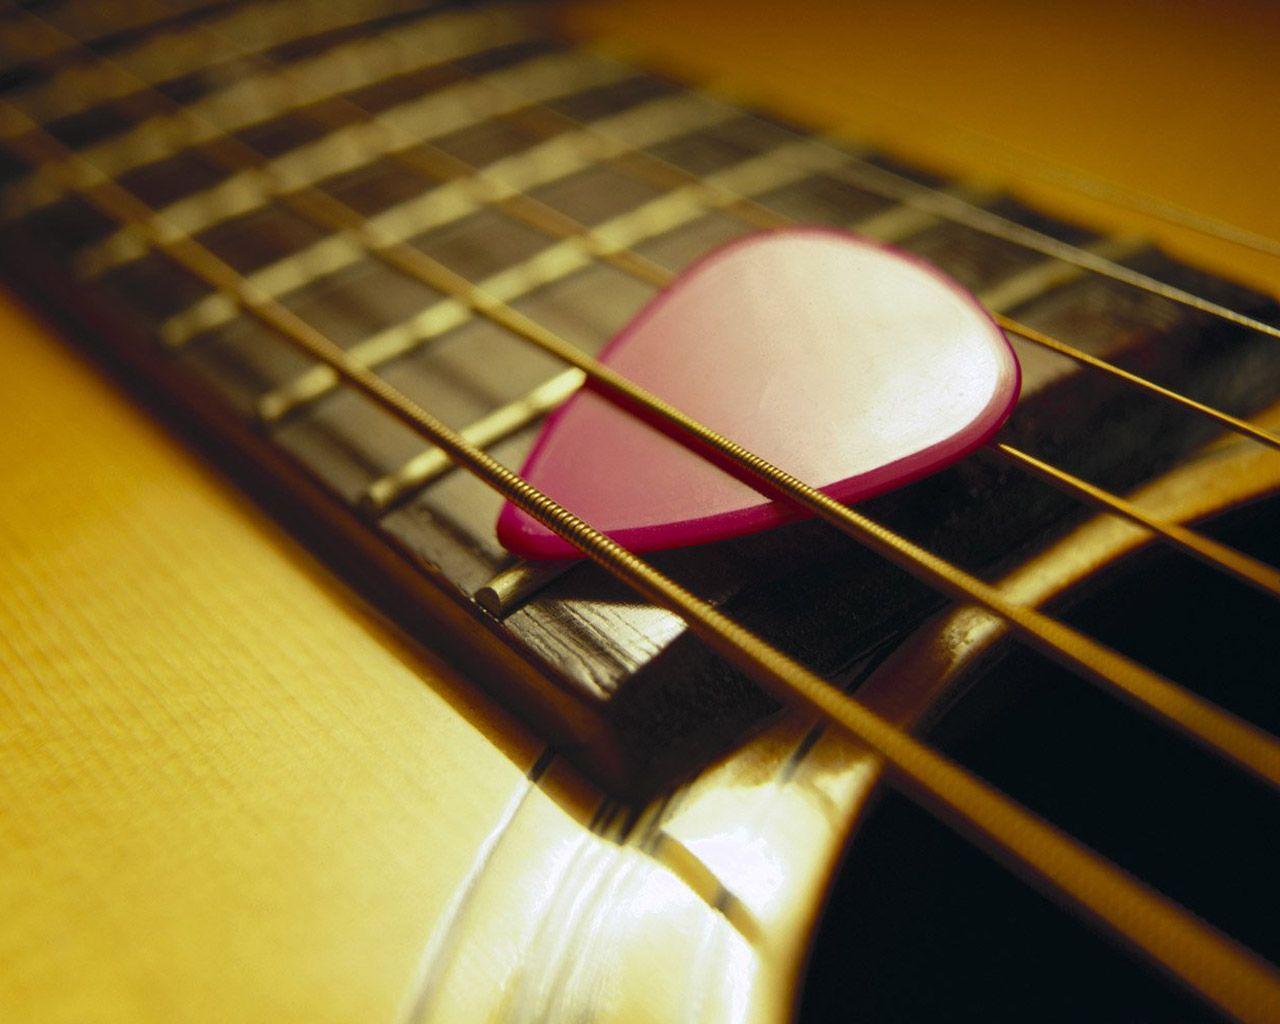 Gibson Acoustic Guitar Music Image HD Wallpaper For Desktop Mobile